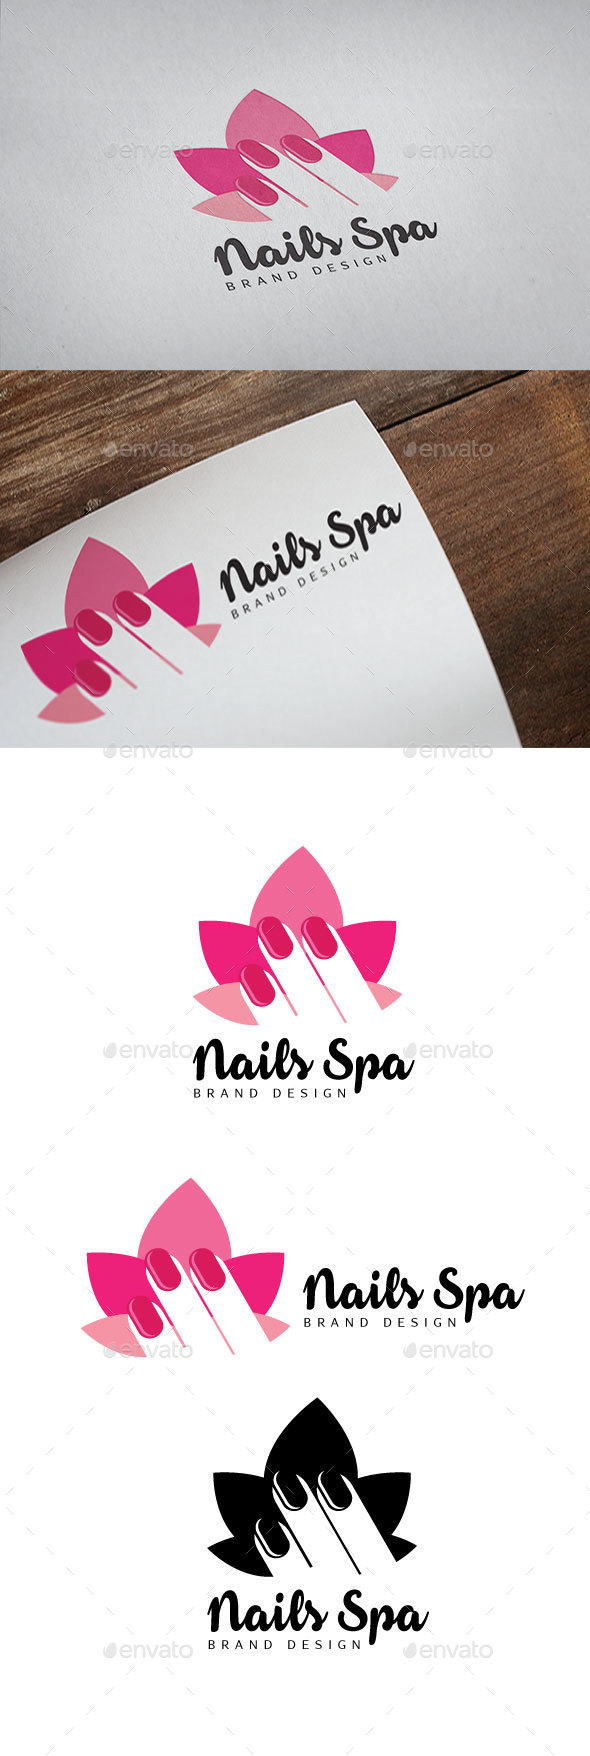 Nails Spa Logo by Goodigital | GraphicRiver